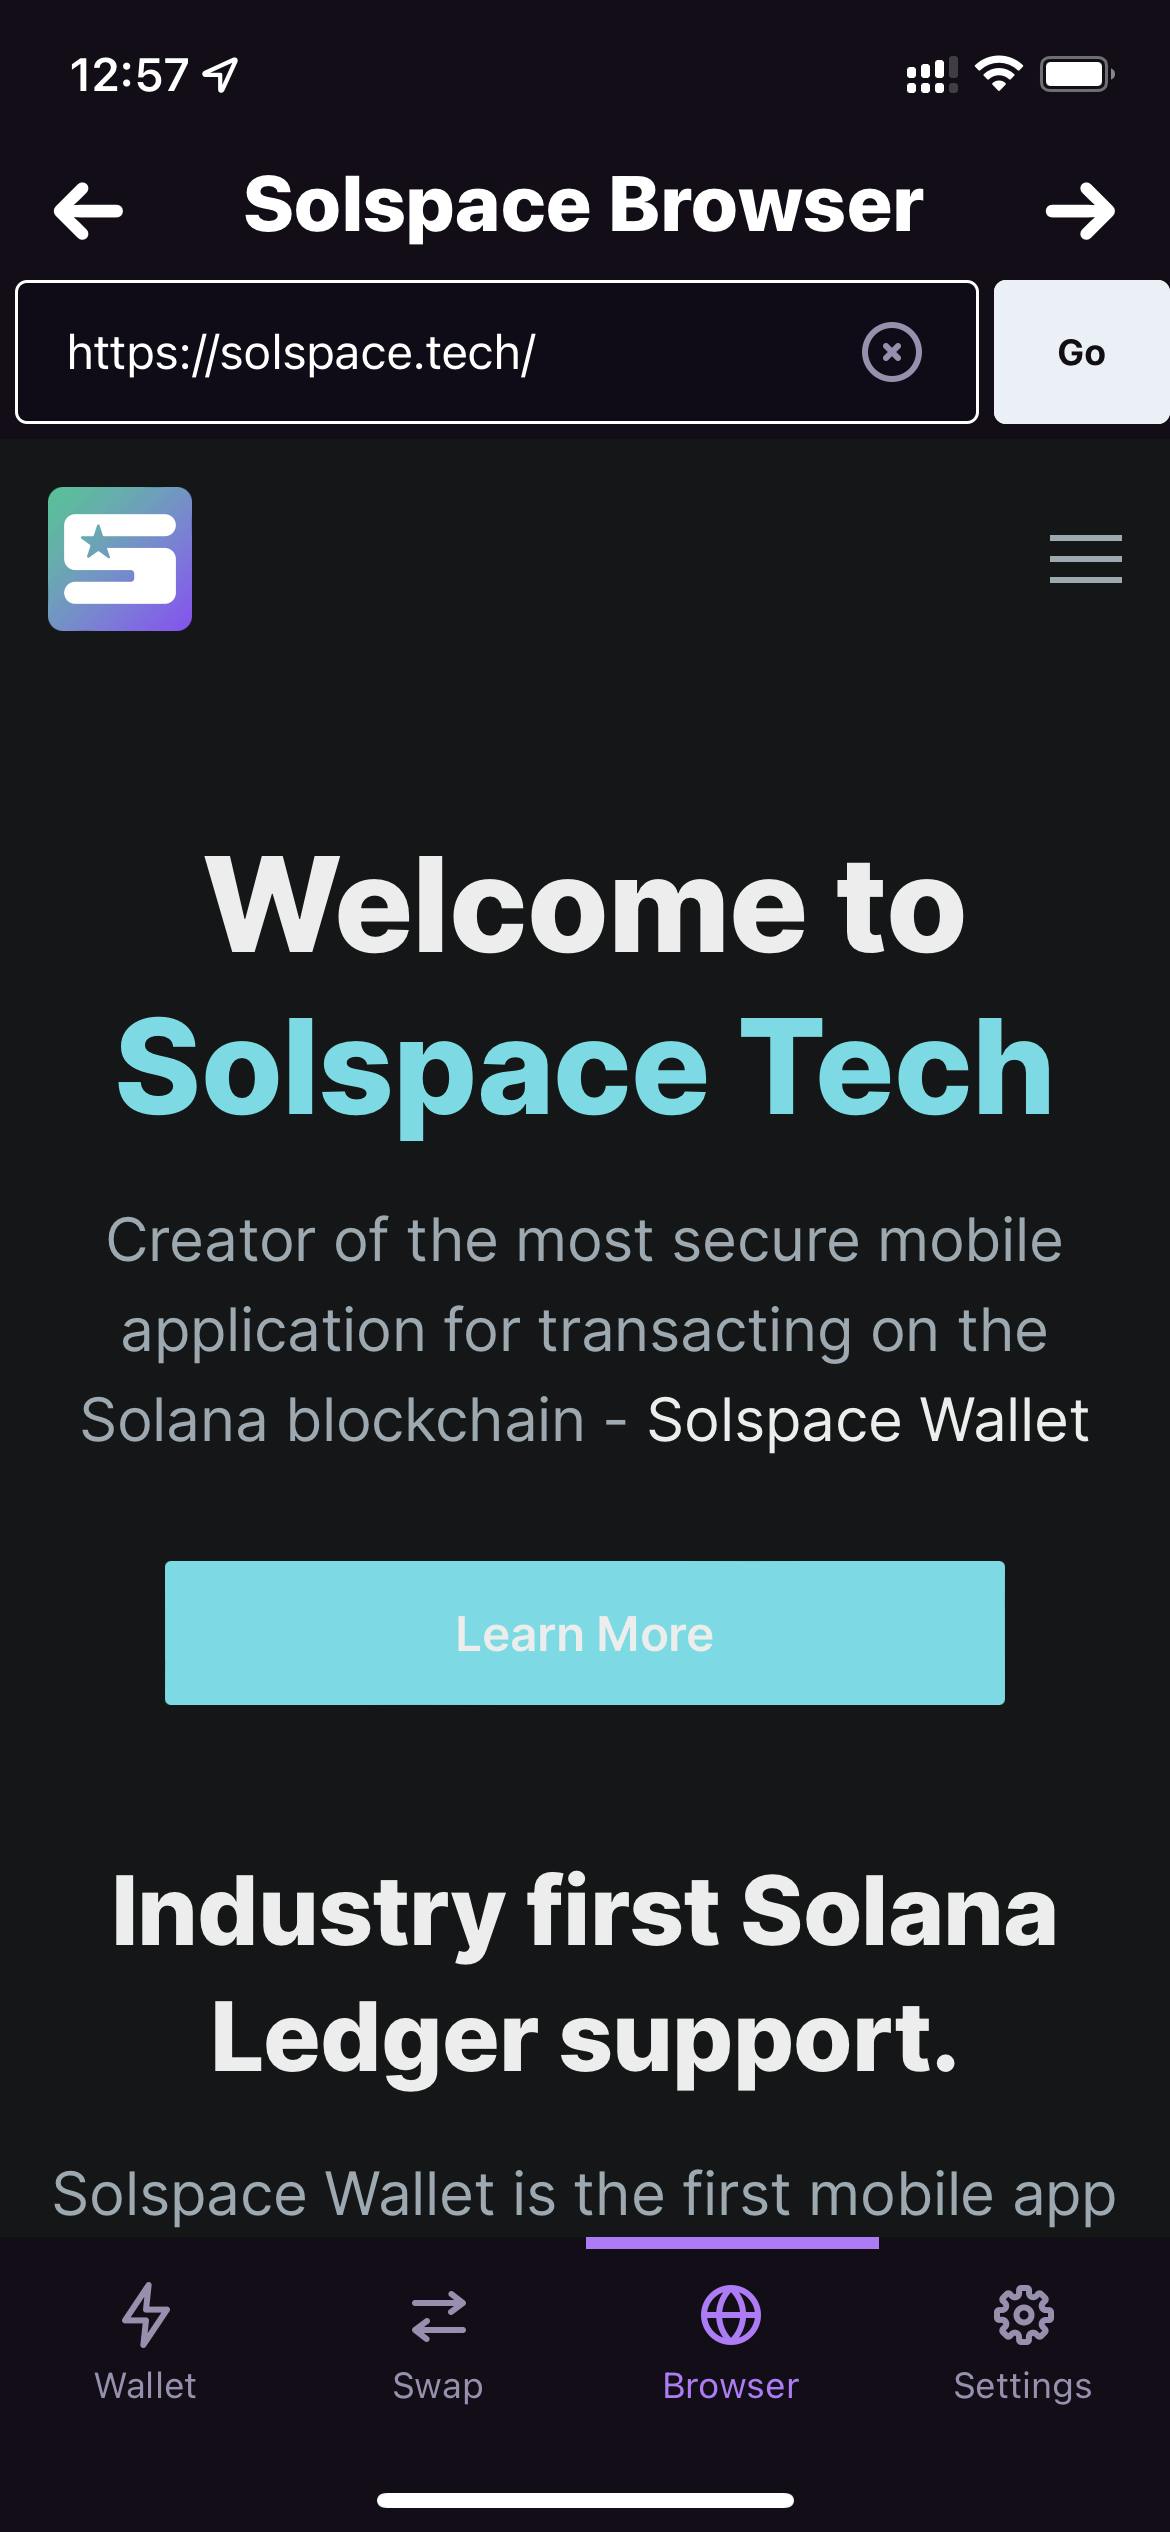 Solspace Wallet